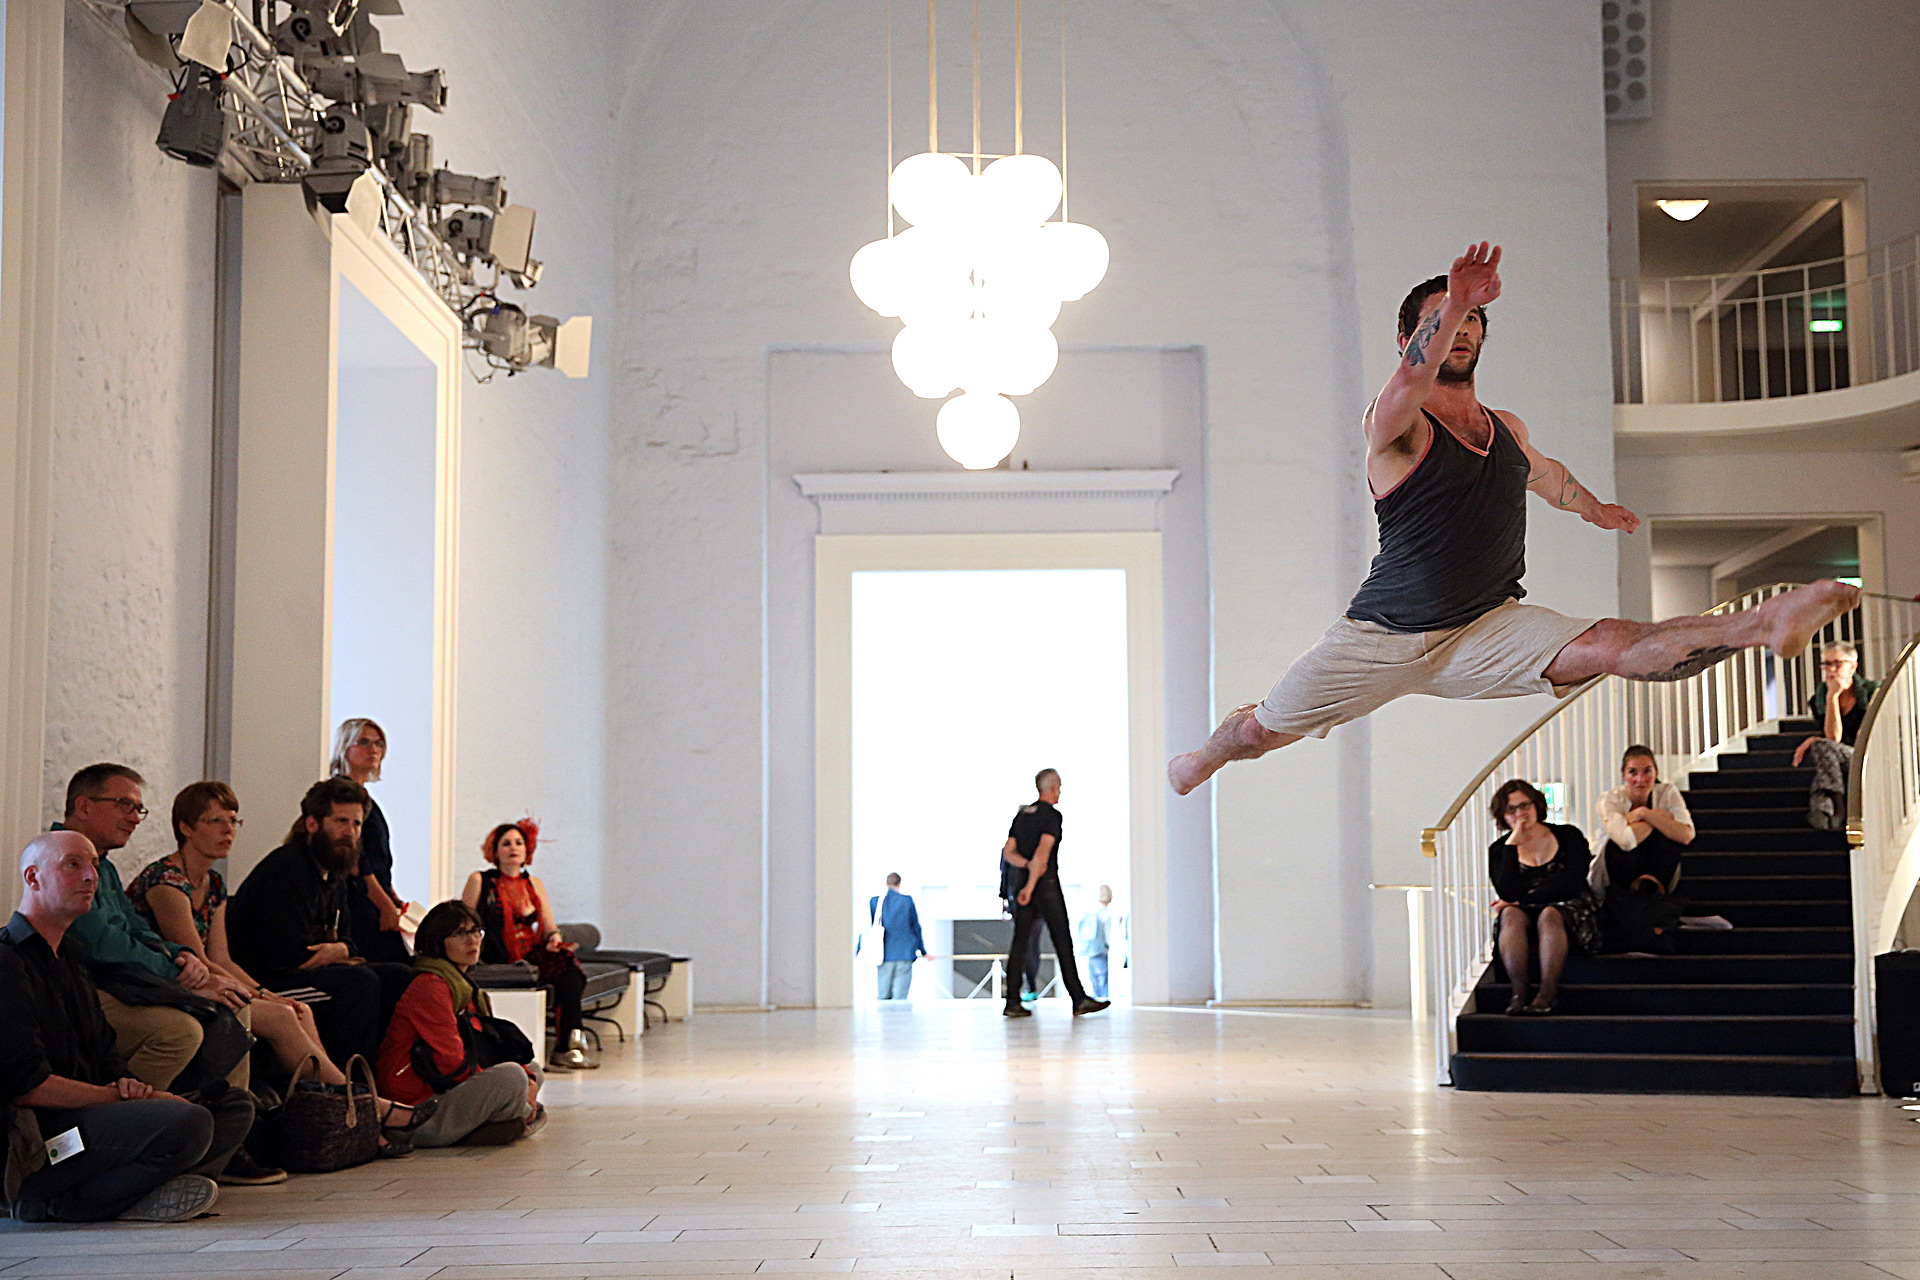 Staatsoper Hannover
BORIS CHARMATZ
MUSÉE DE LA DANSE: COMMON CHOREOGRAPHIES
20 DANCERS FOR THE XX CENTURY